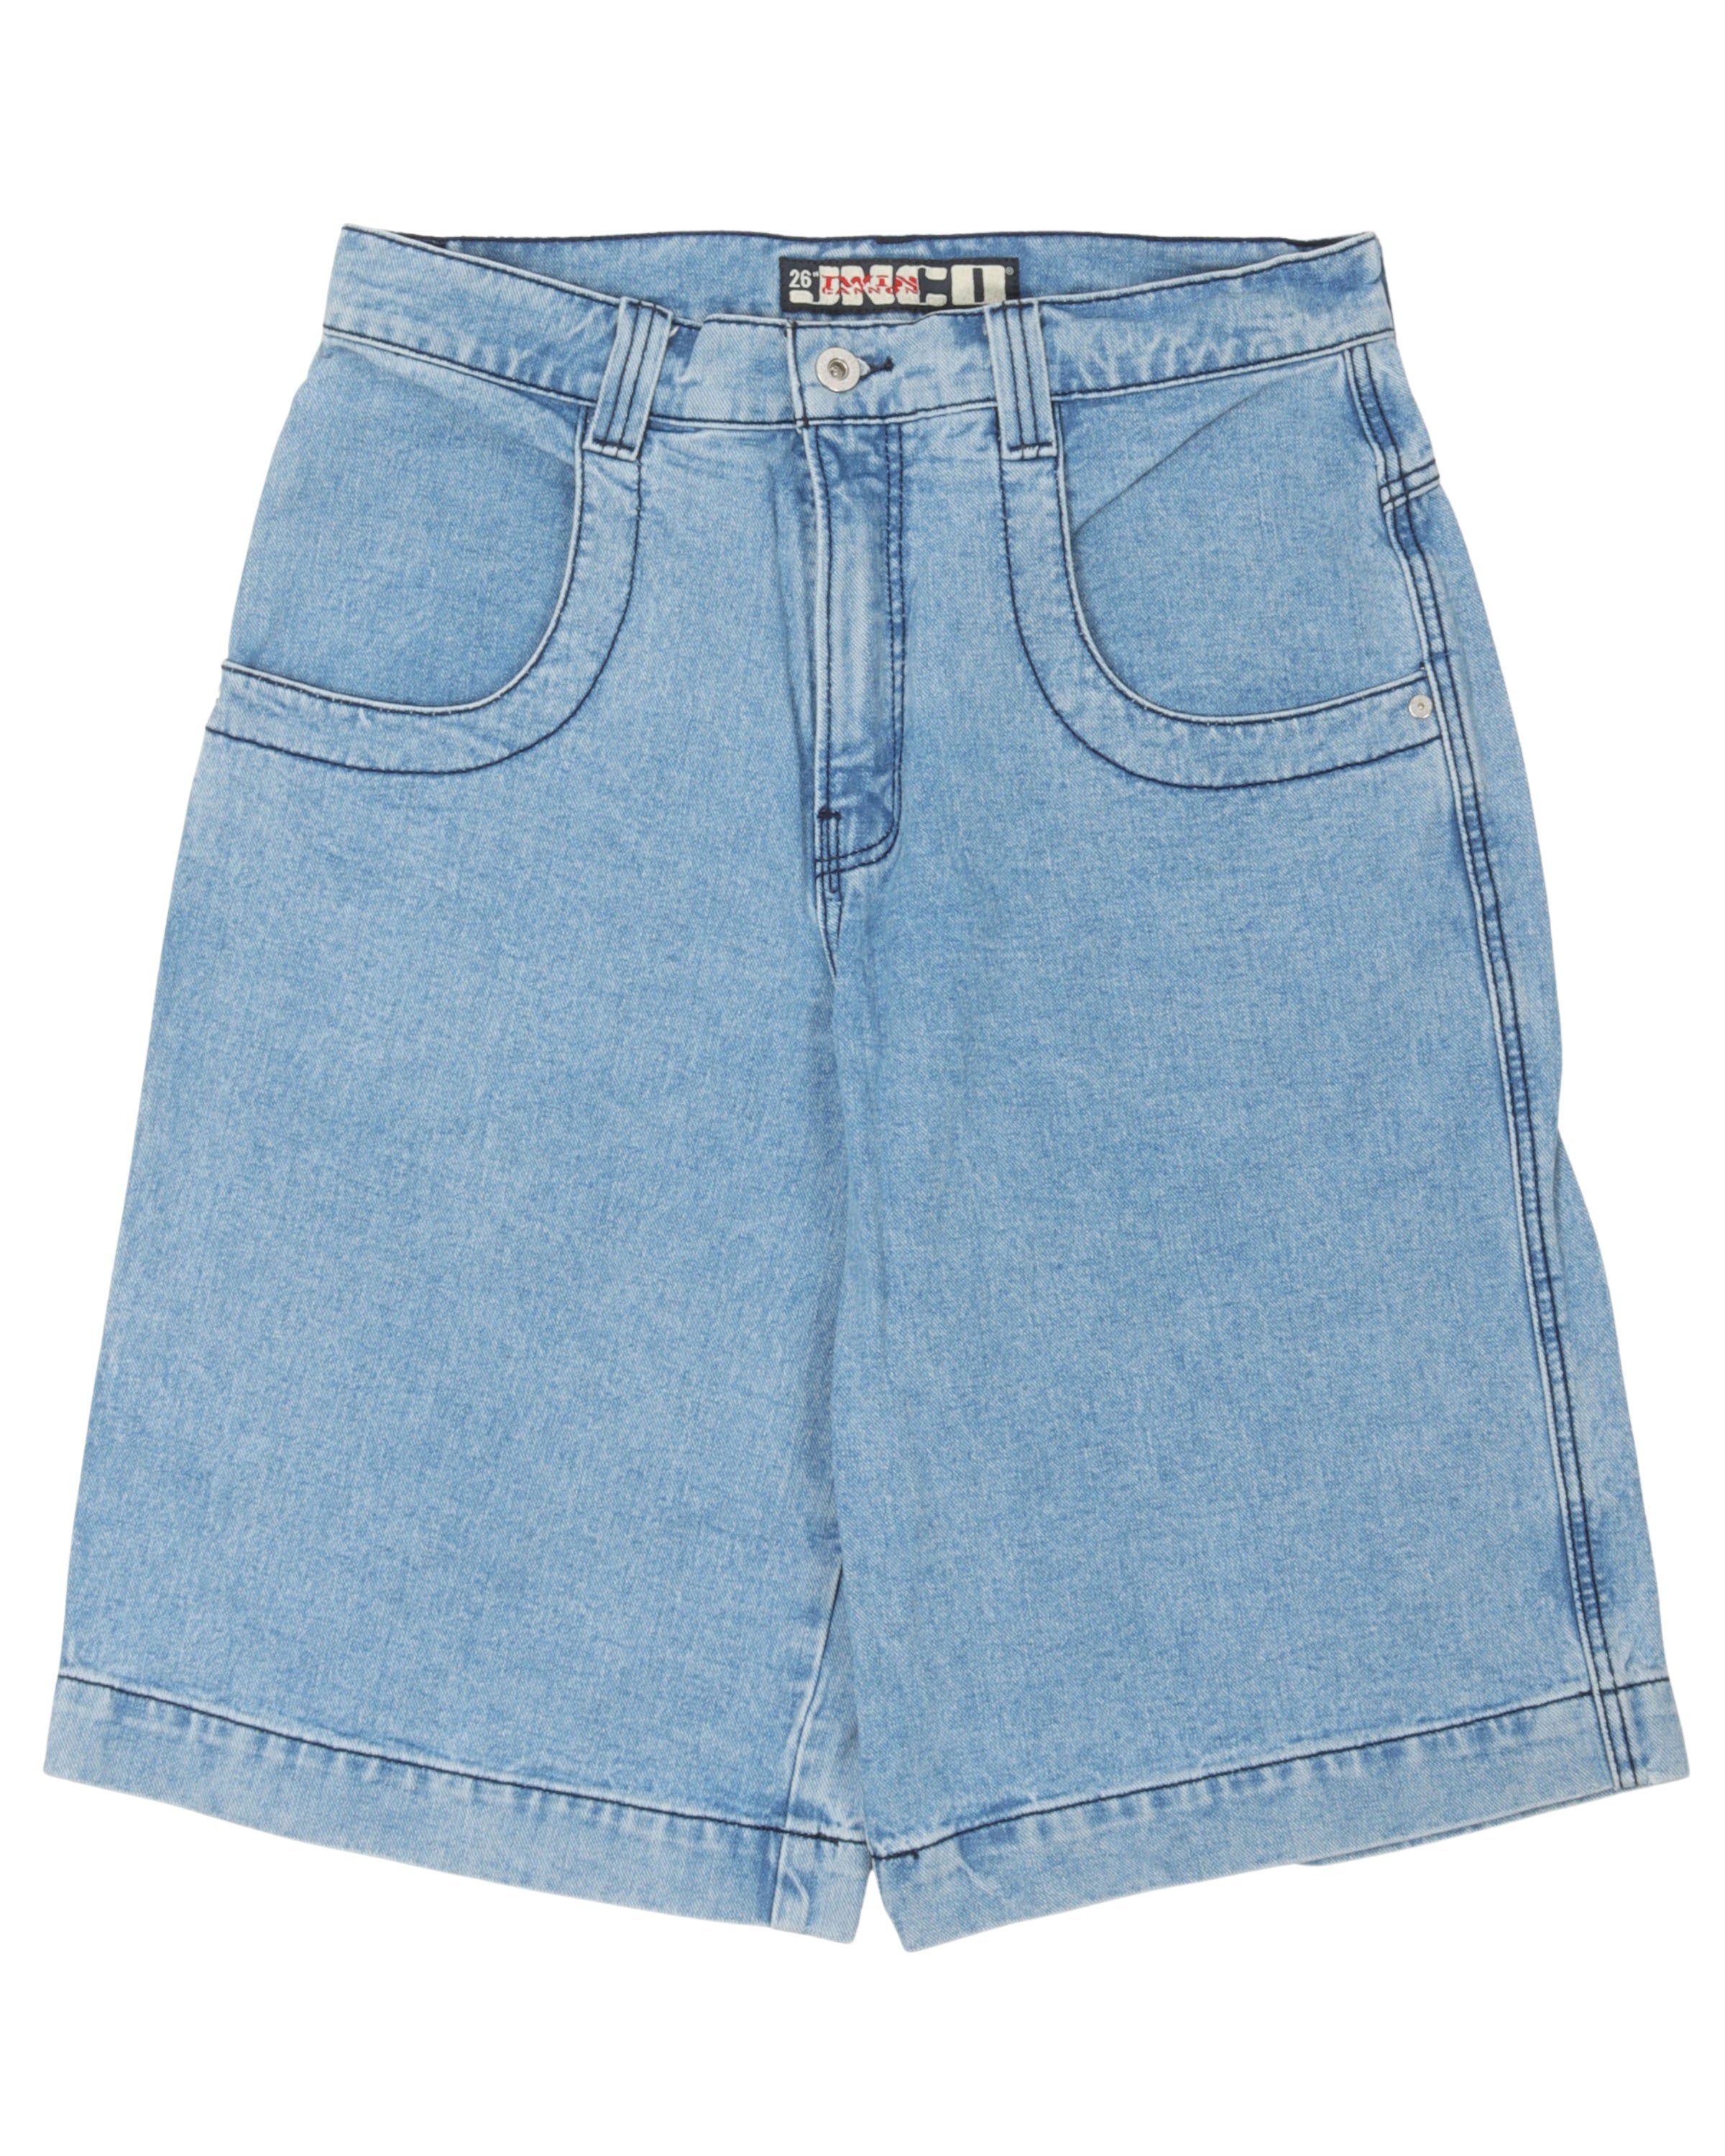 Vintage Jinco Baggy Jean Shorts